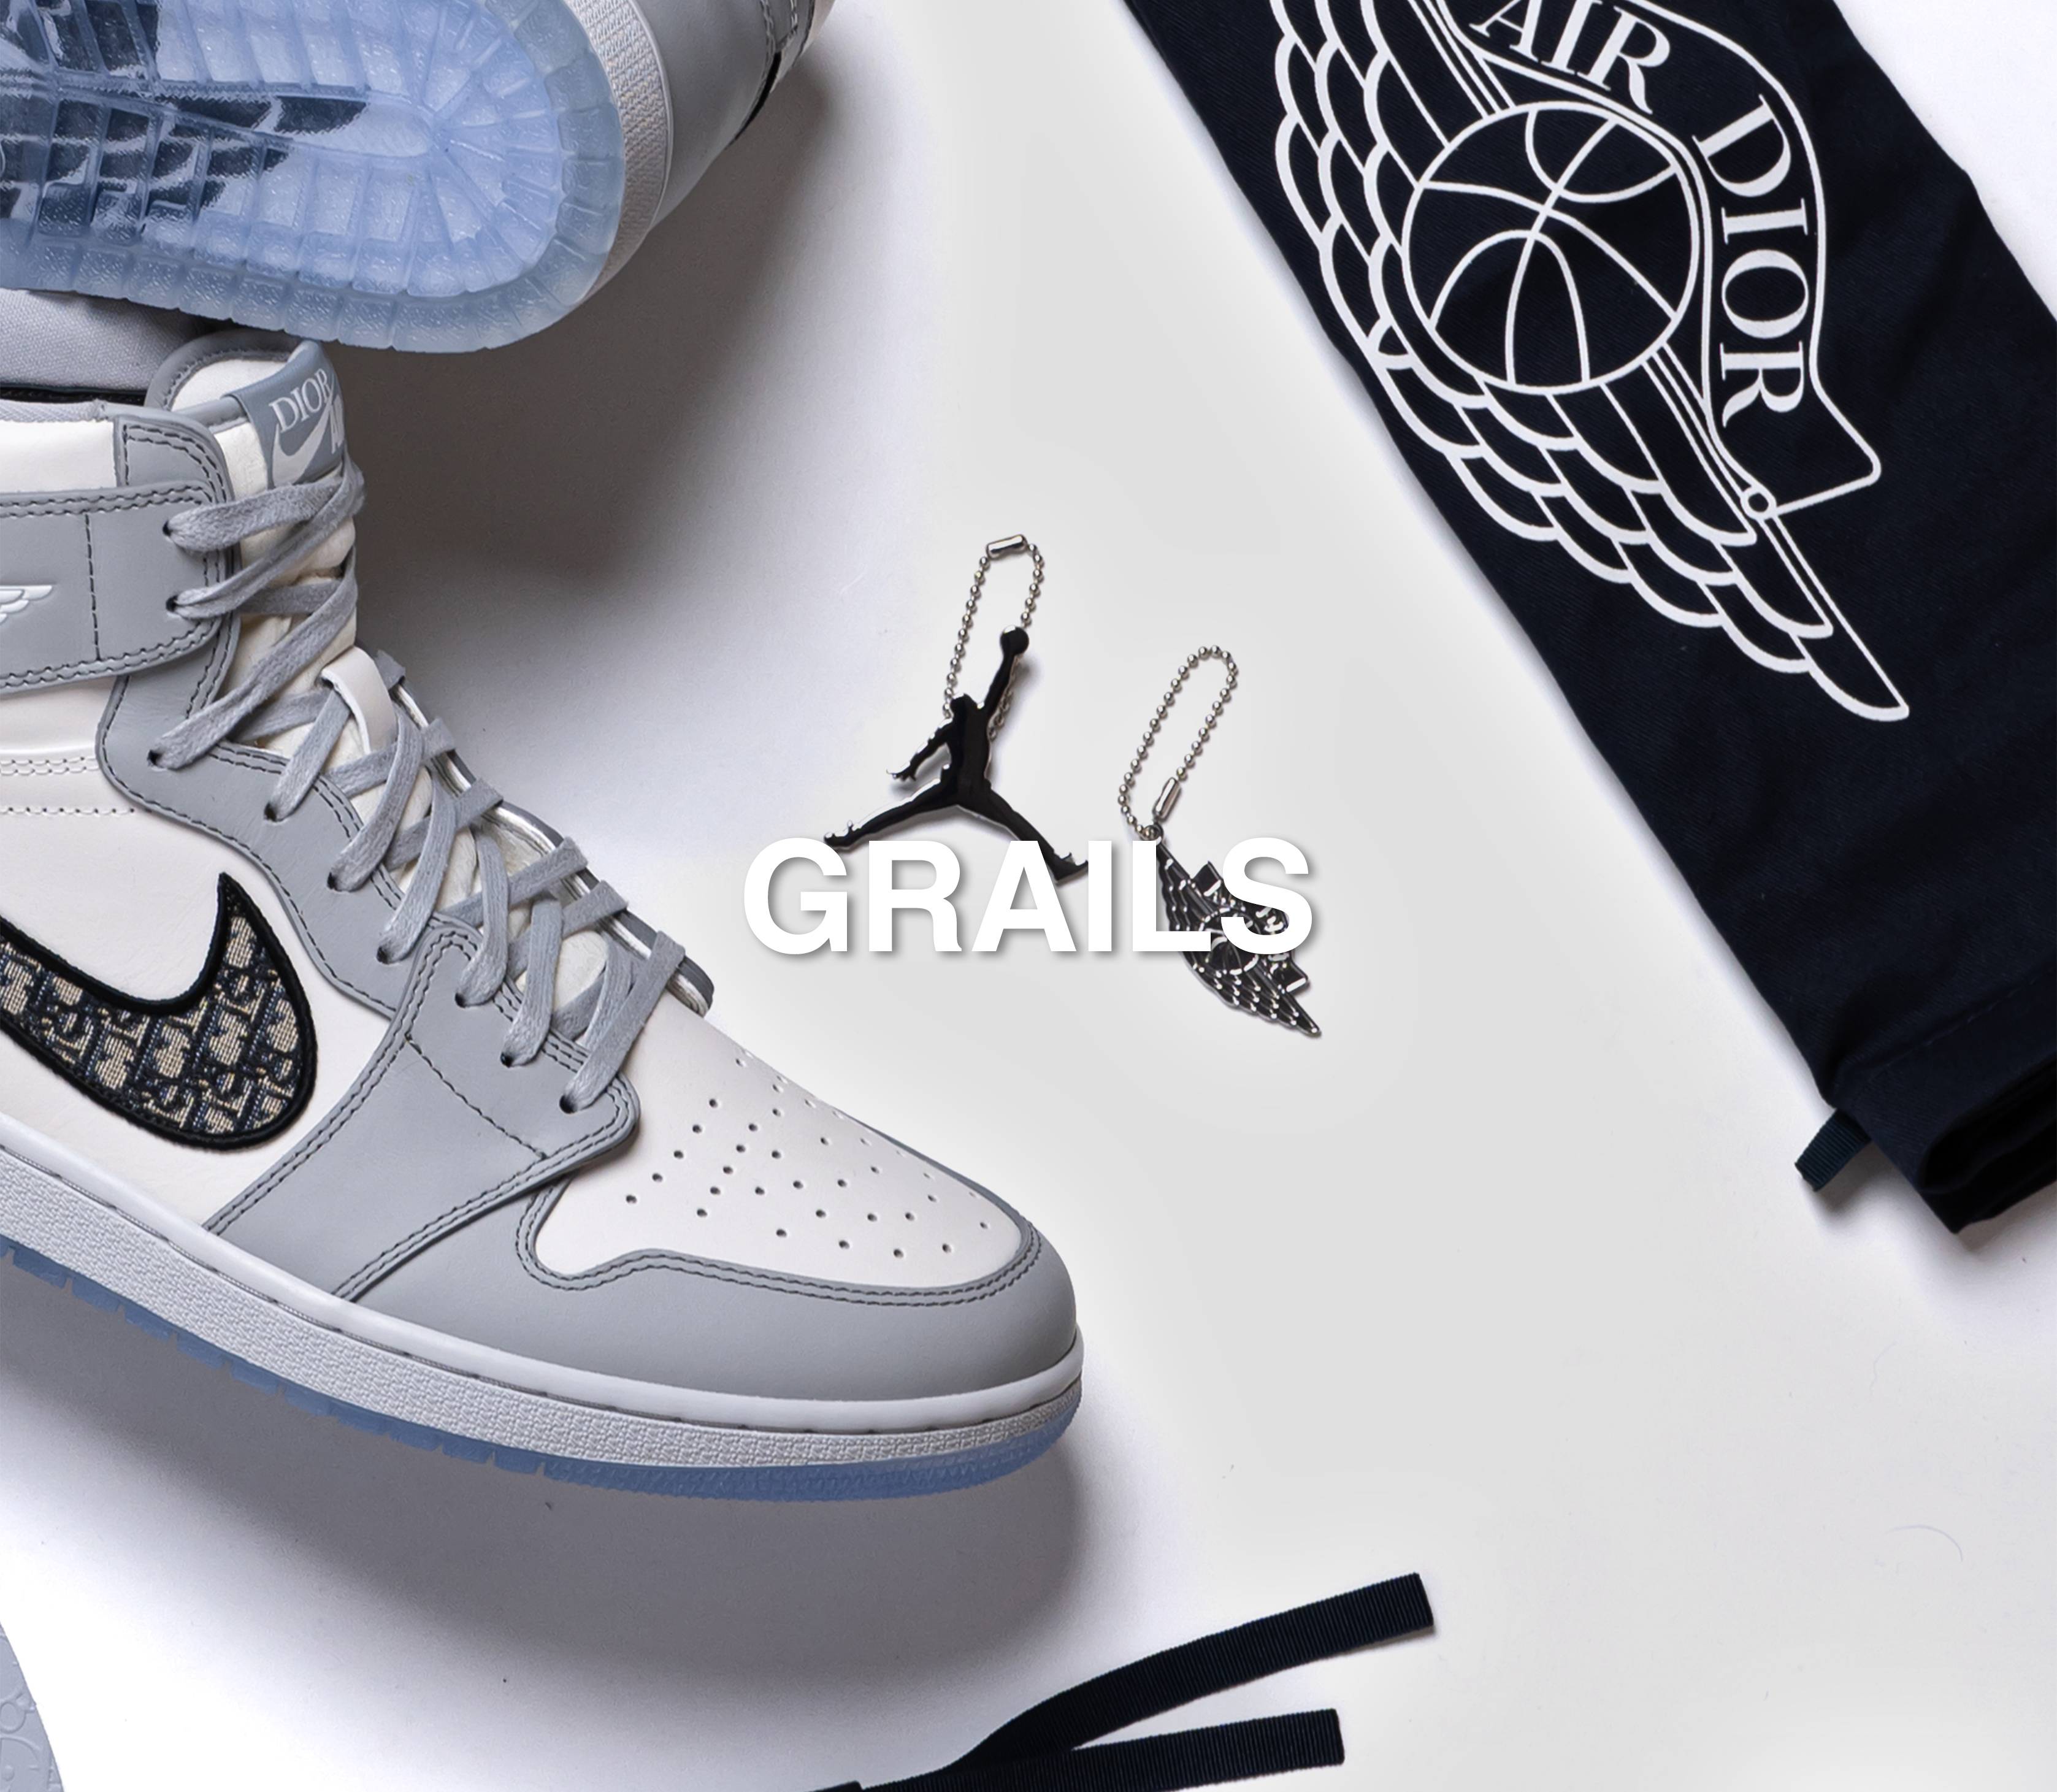 Off-Louis LV Design on Nike Air Jordan 1 High